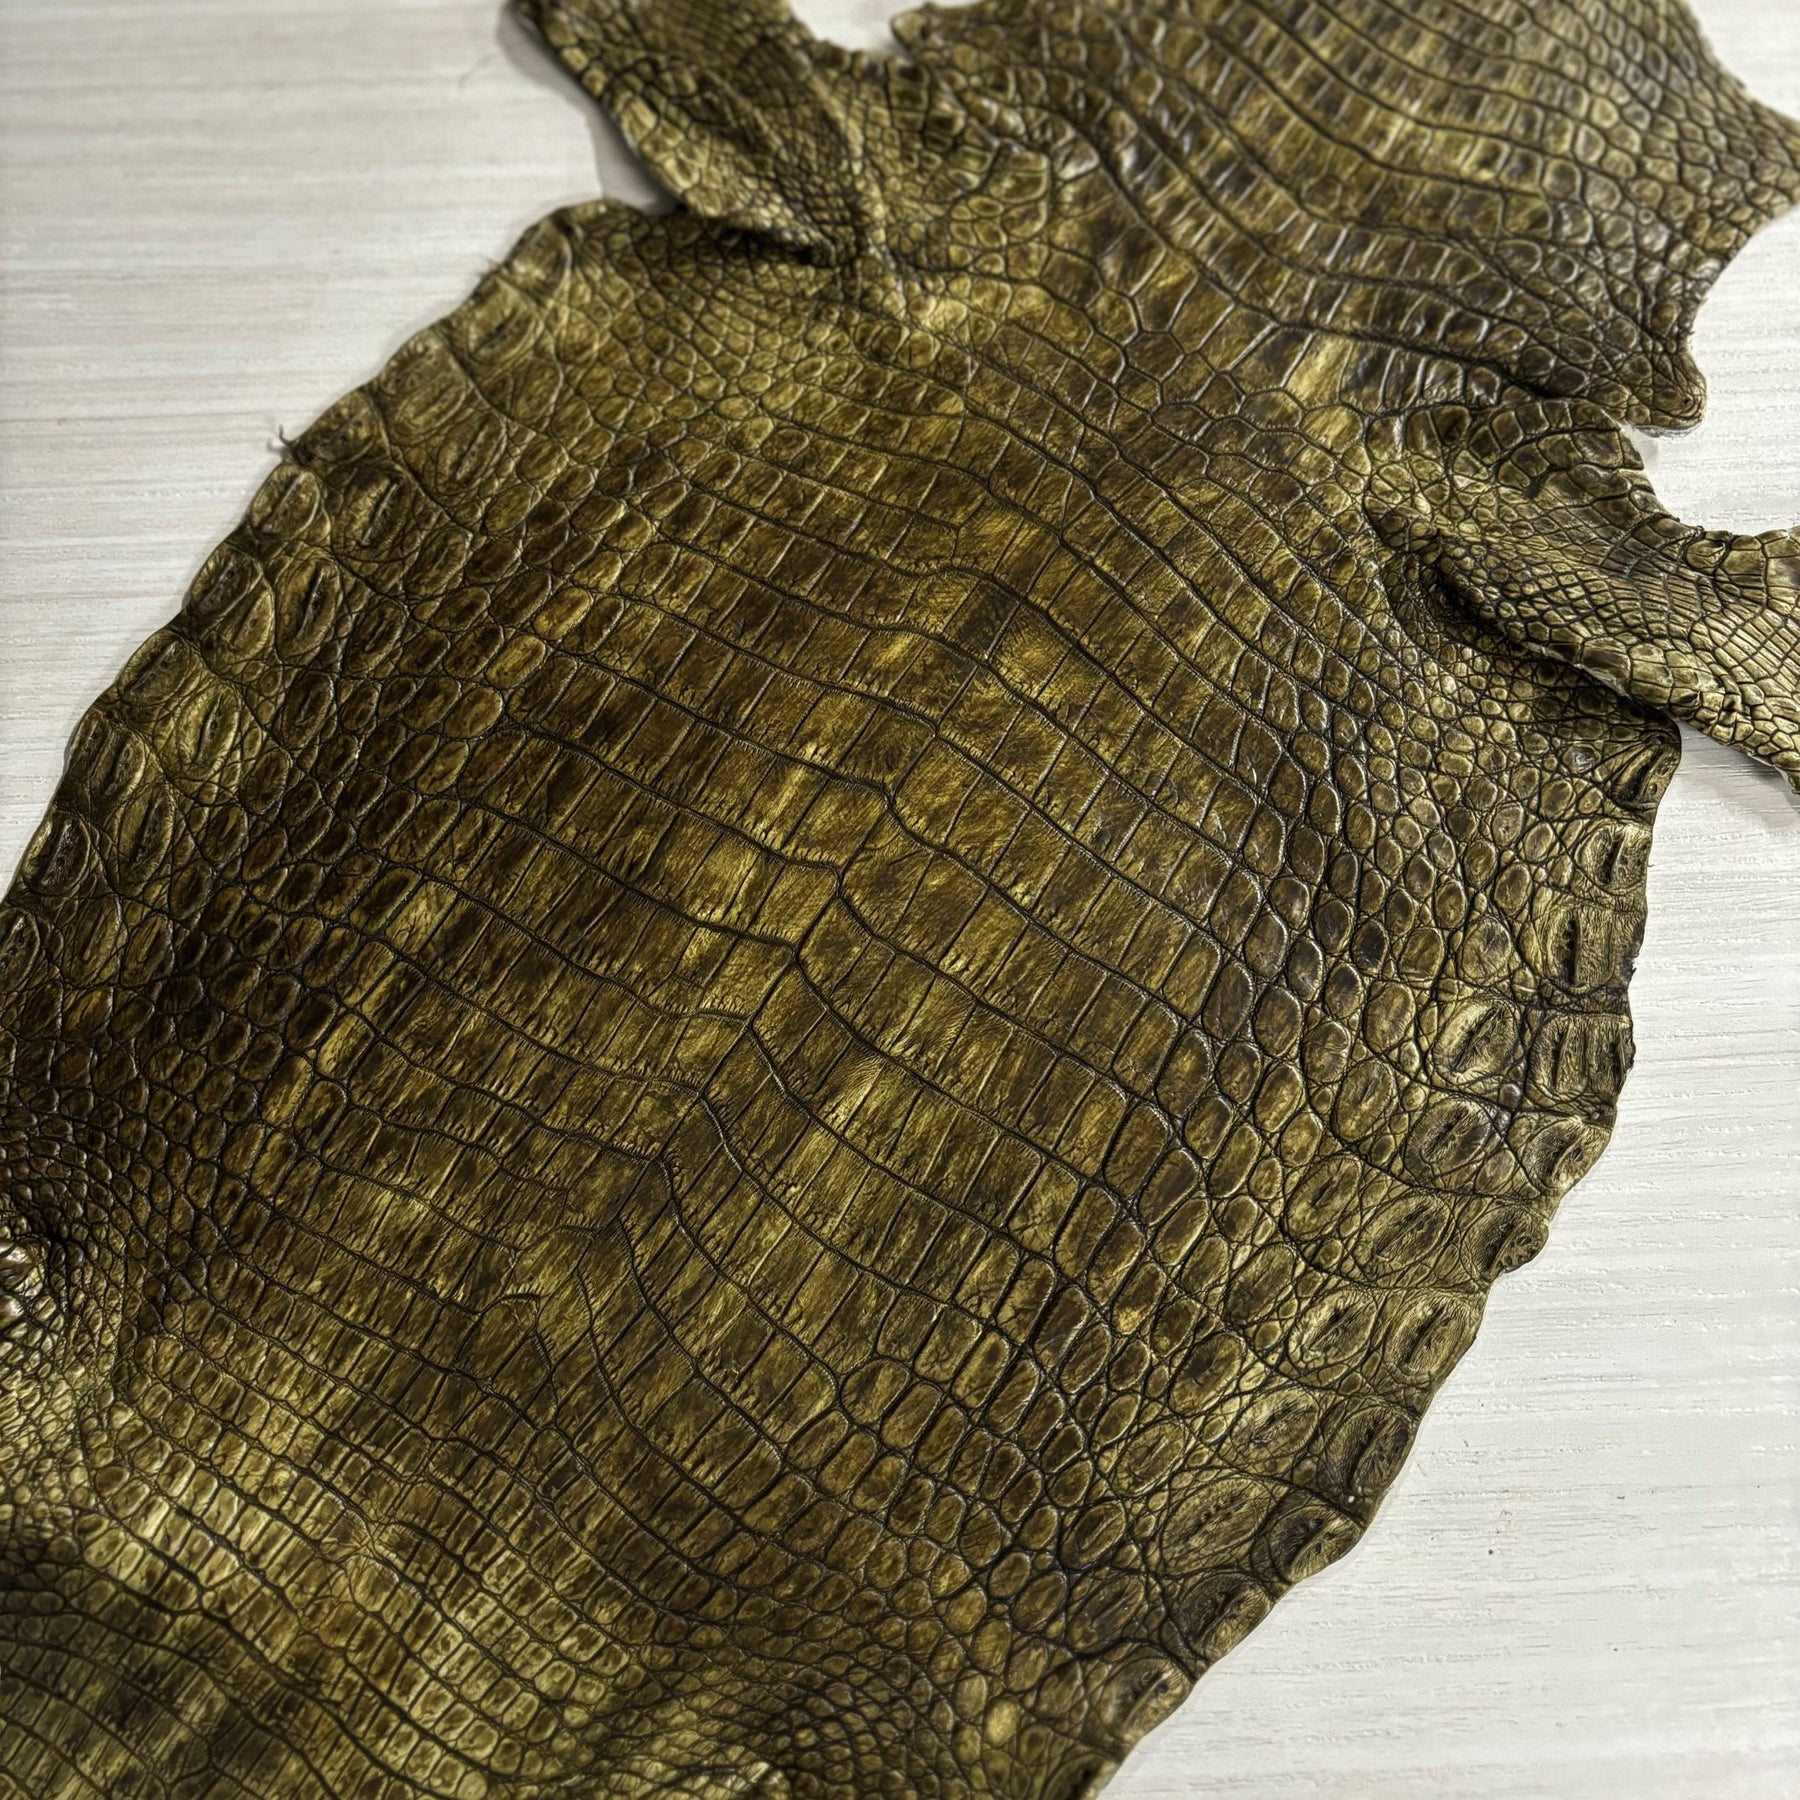 Hand-Painted Nile Crocodile #2 | 25 cm